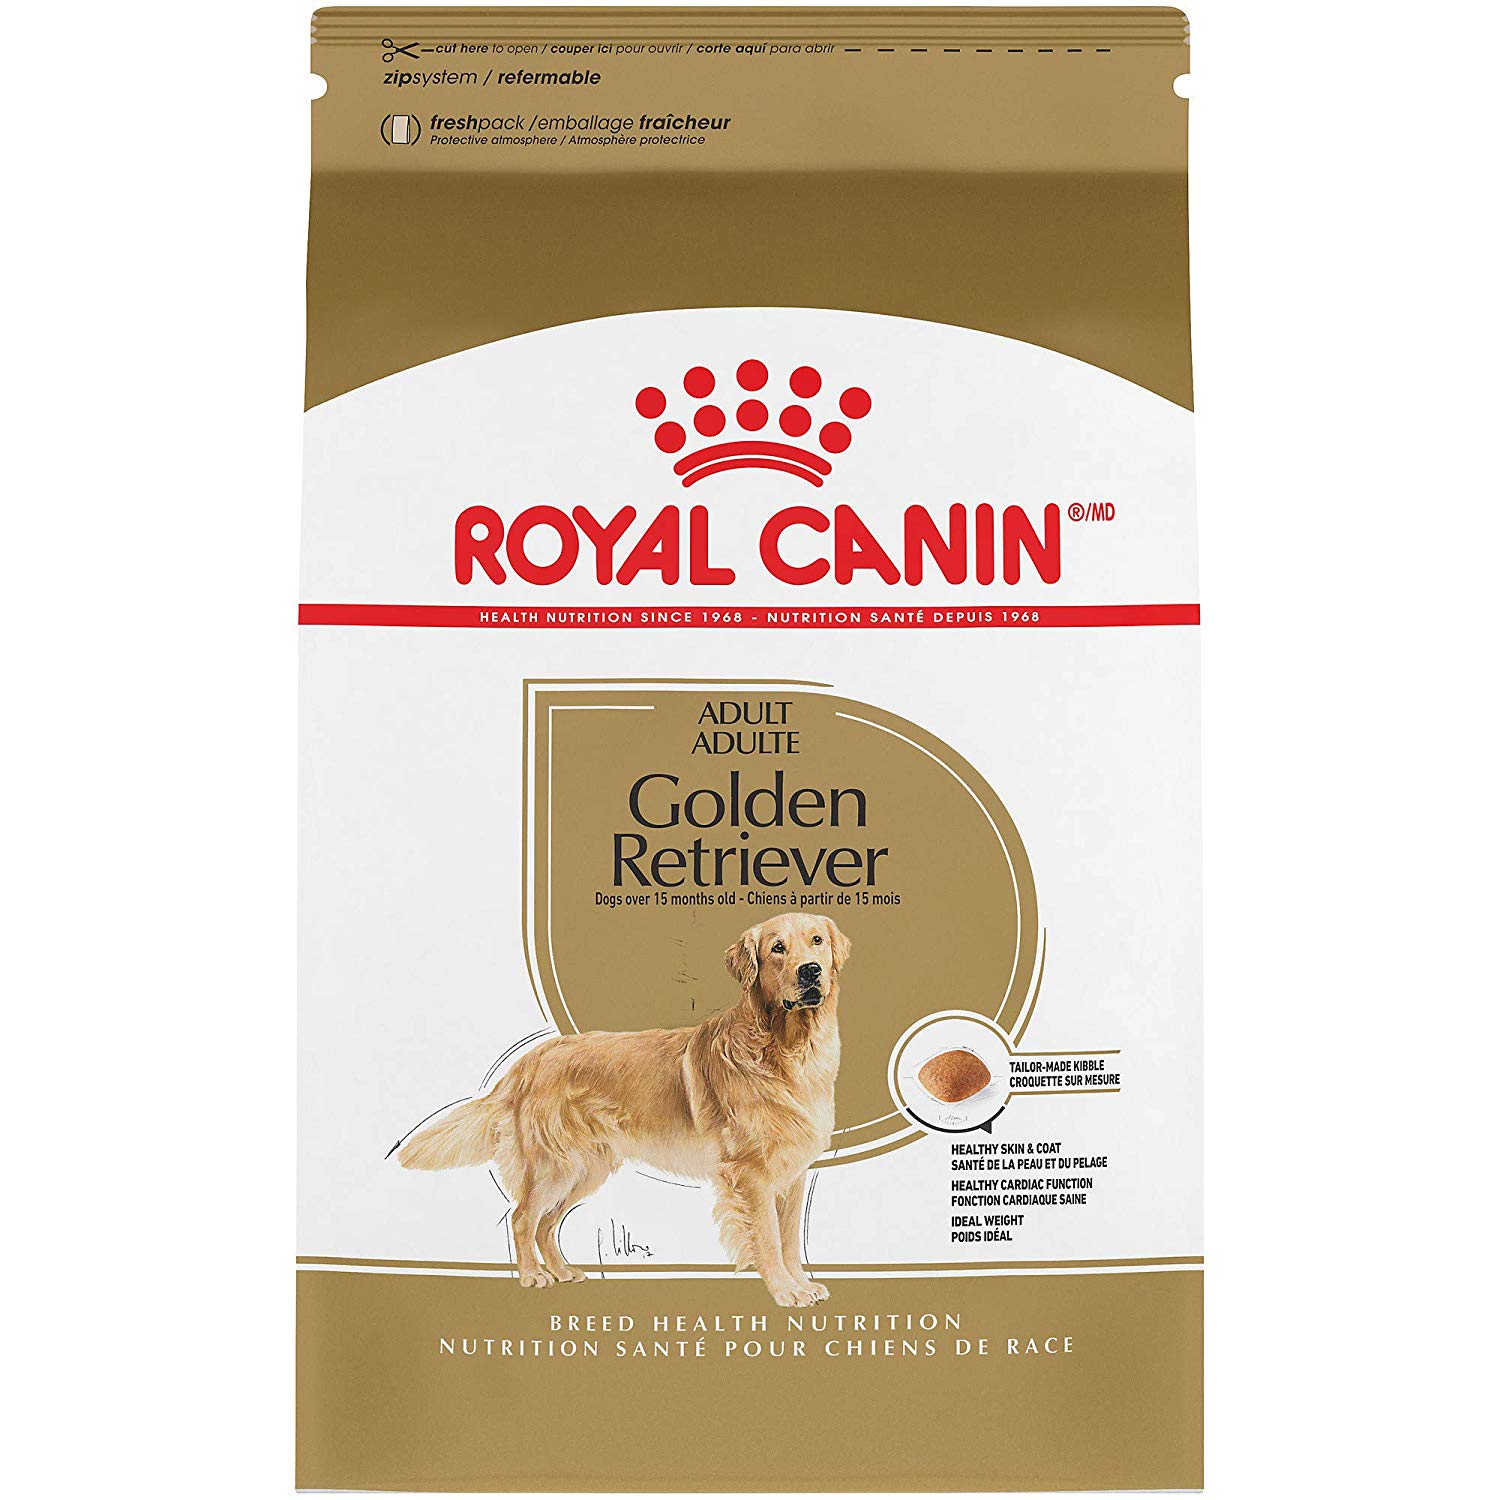 ROYAL CANIN® GOLDEN RETRIEVER ADULT DRY DOG FOOD ...